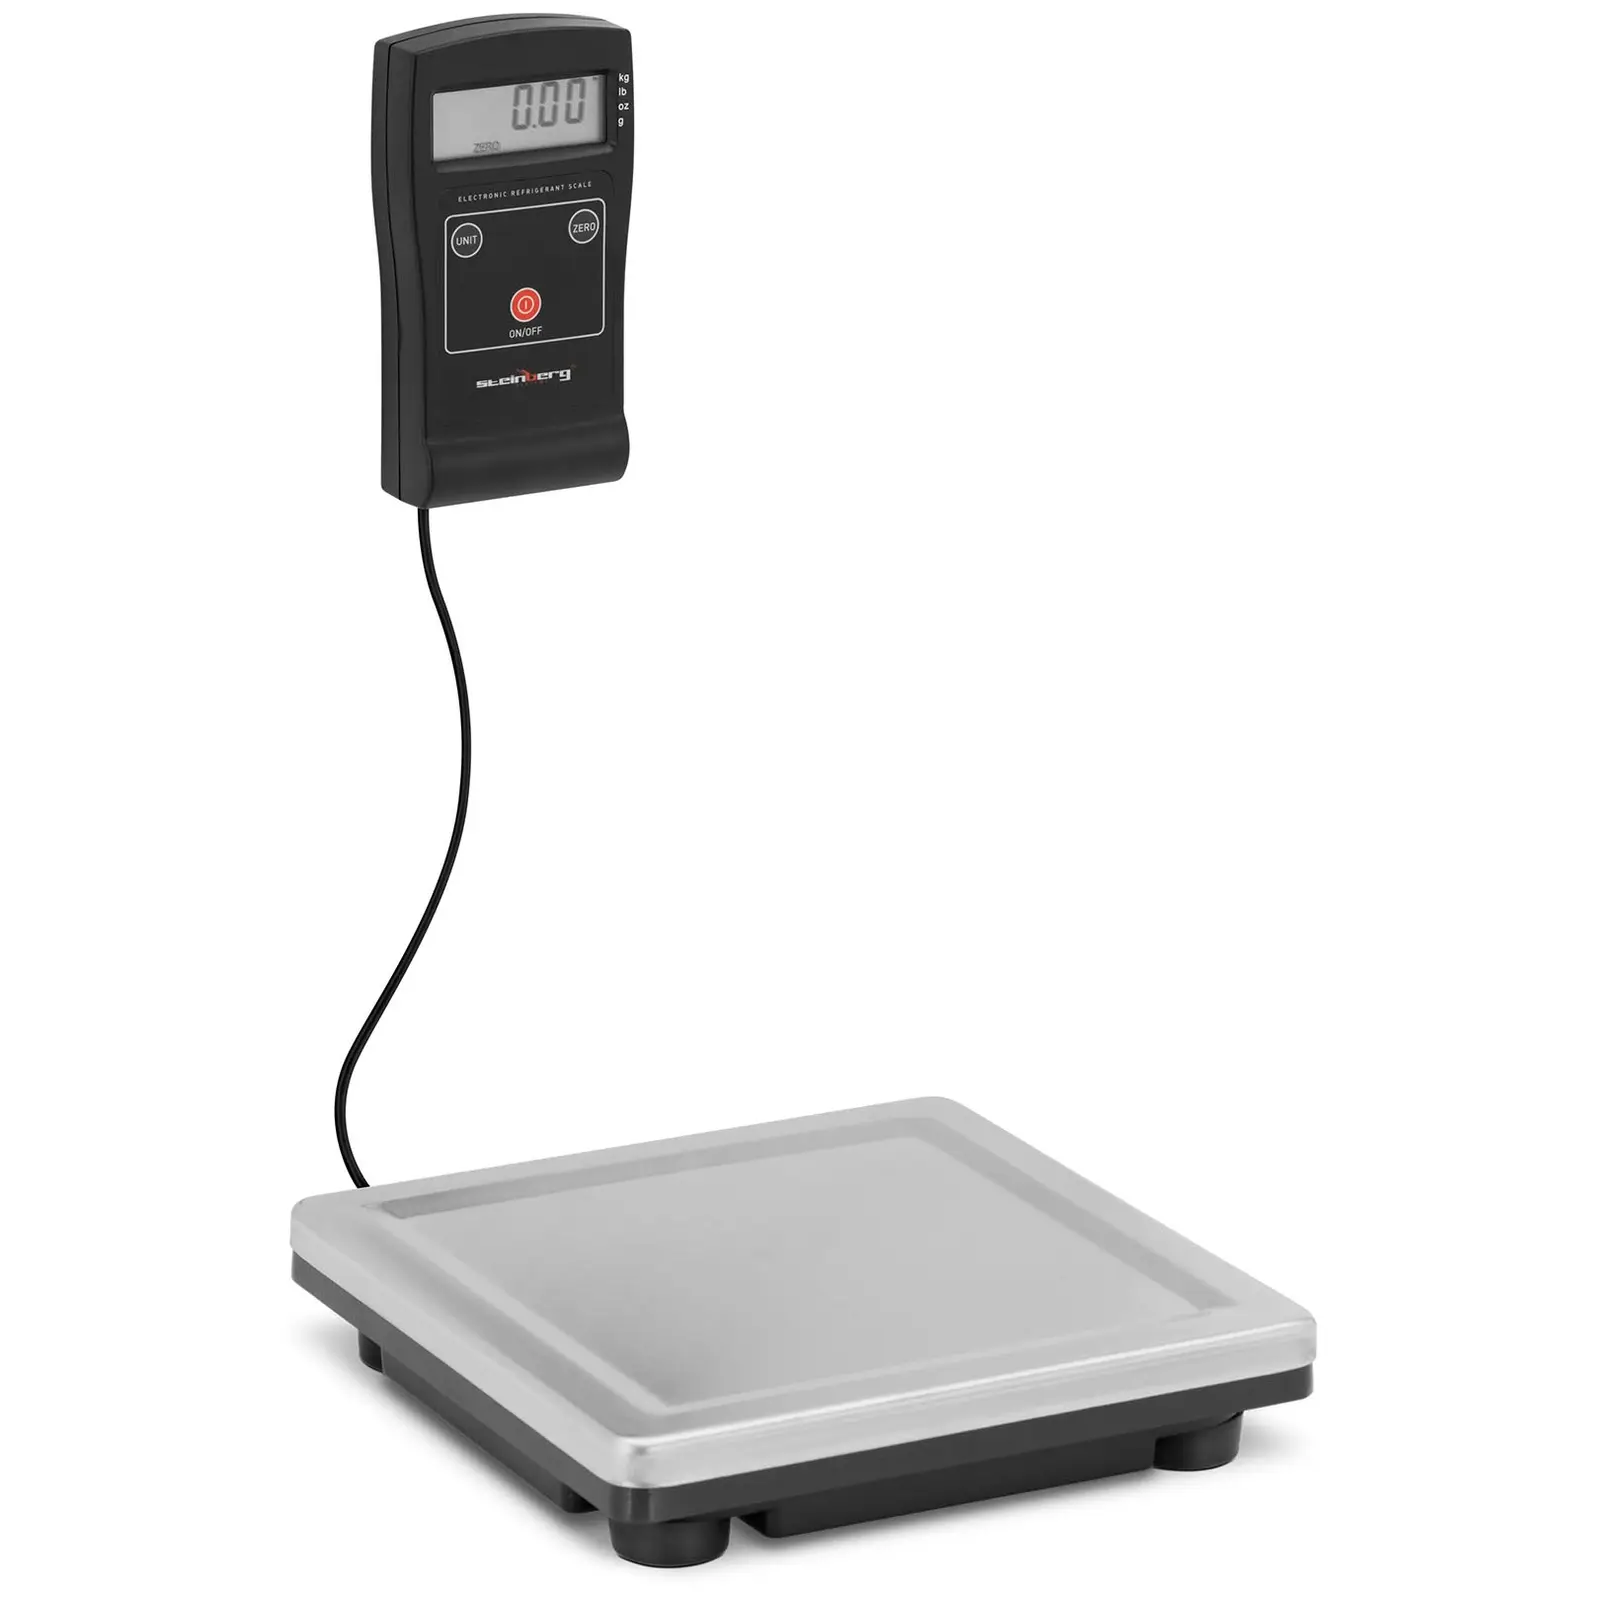 Bilancia elettronica refrigerante - 80 kg - Precisione: 0,02 kg - kg / lb / g / oz